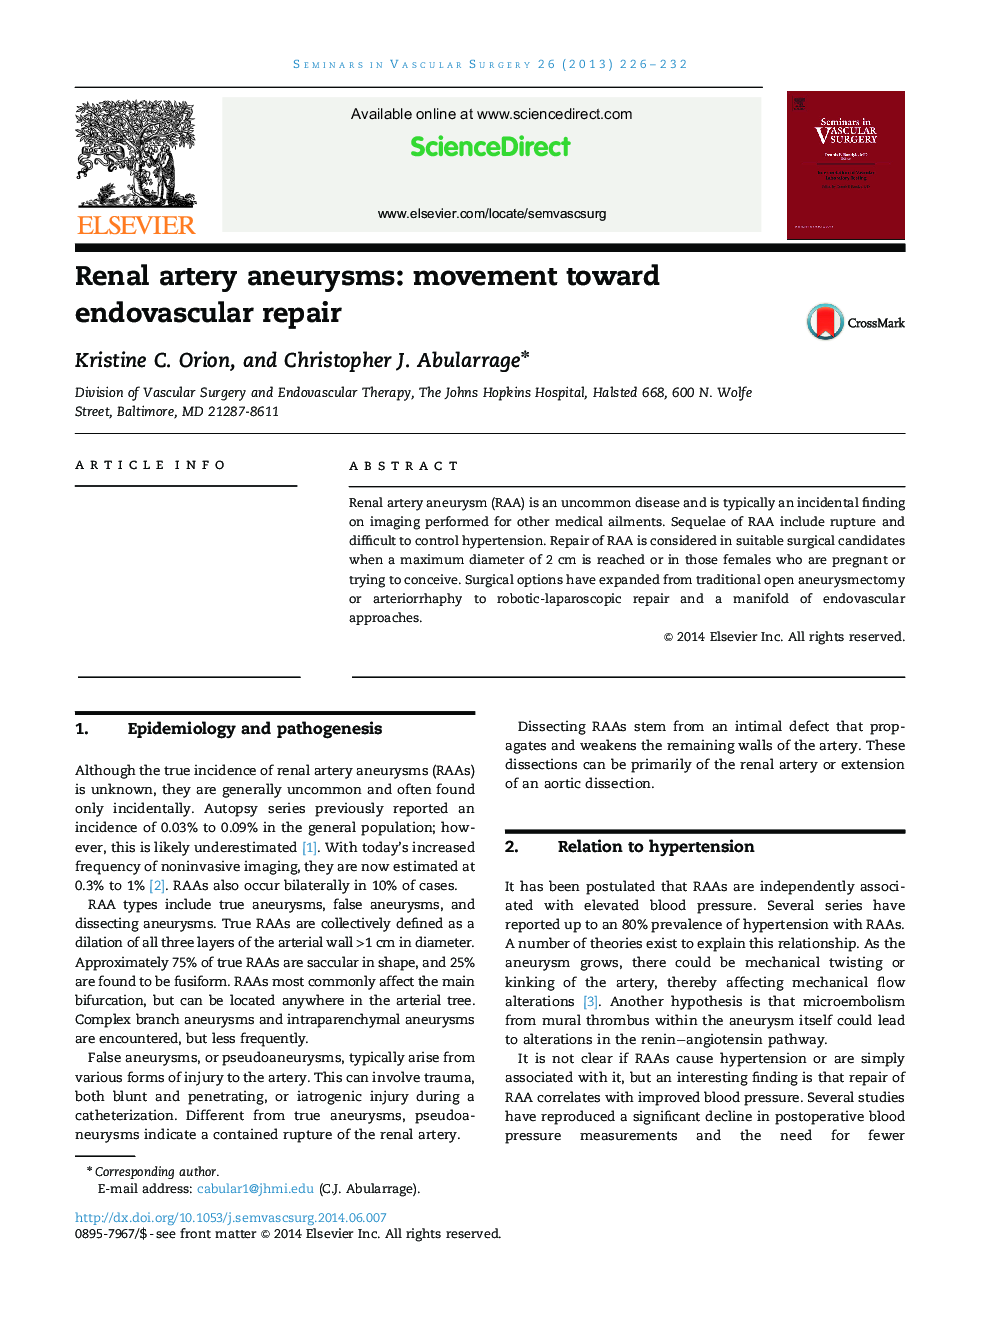 Renal artery aneurysms: movement toward endovascular repair